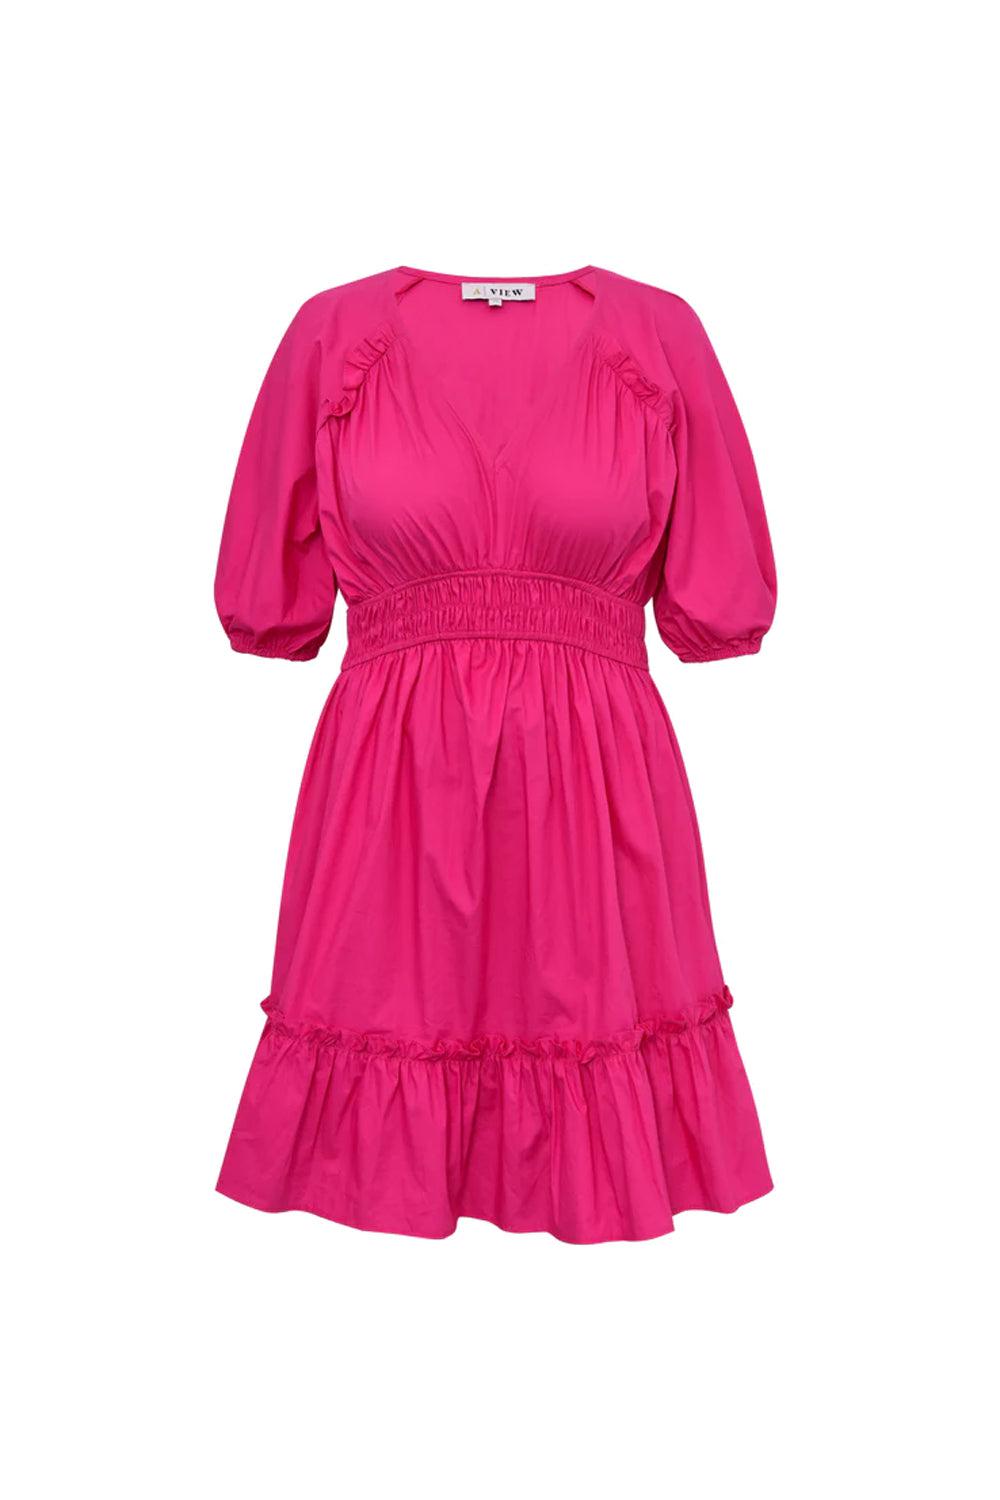 Josa Dress Hot Pink